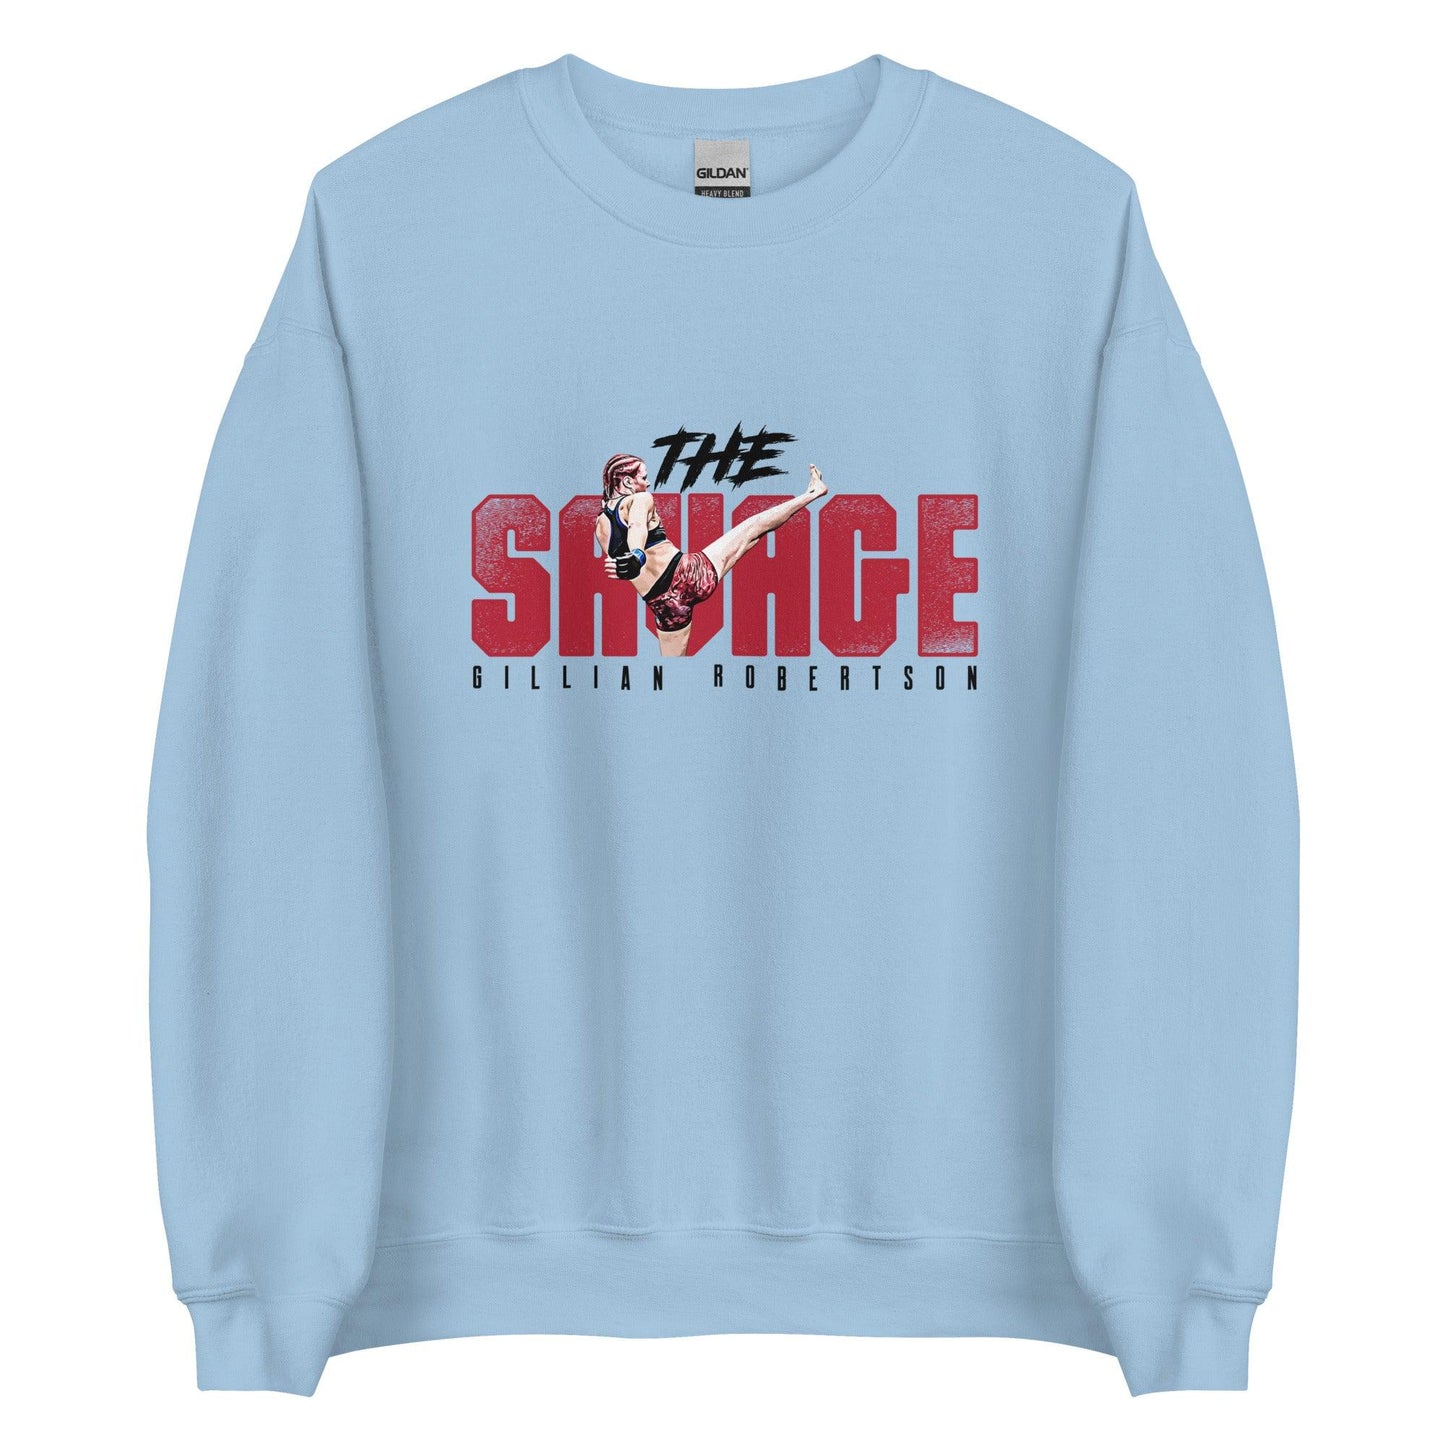 Gillian Robertson "The Savage" Sweatshirt - Fan Arch